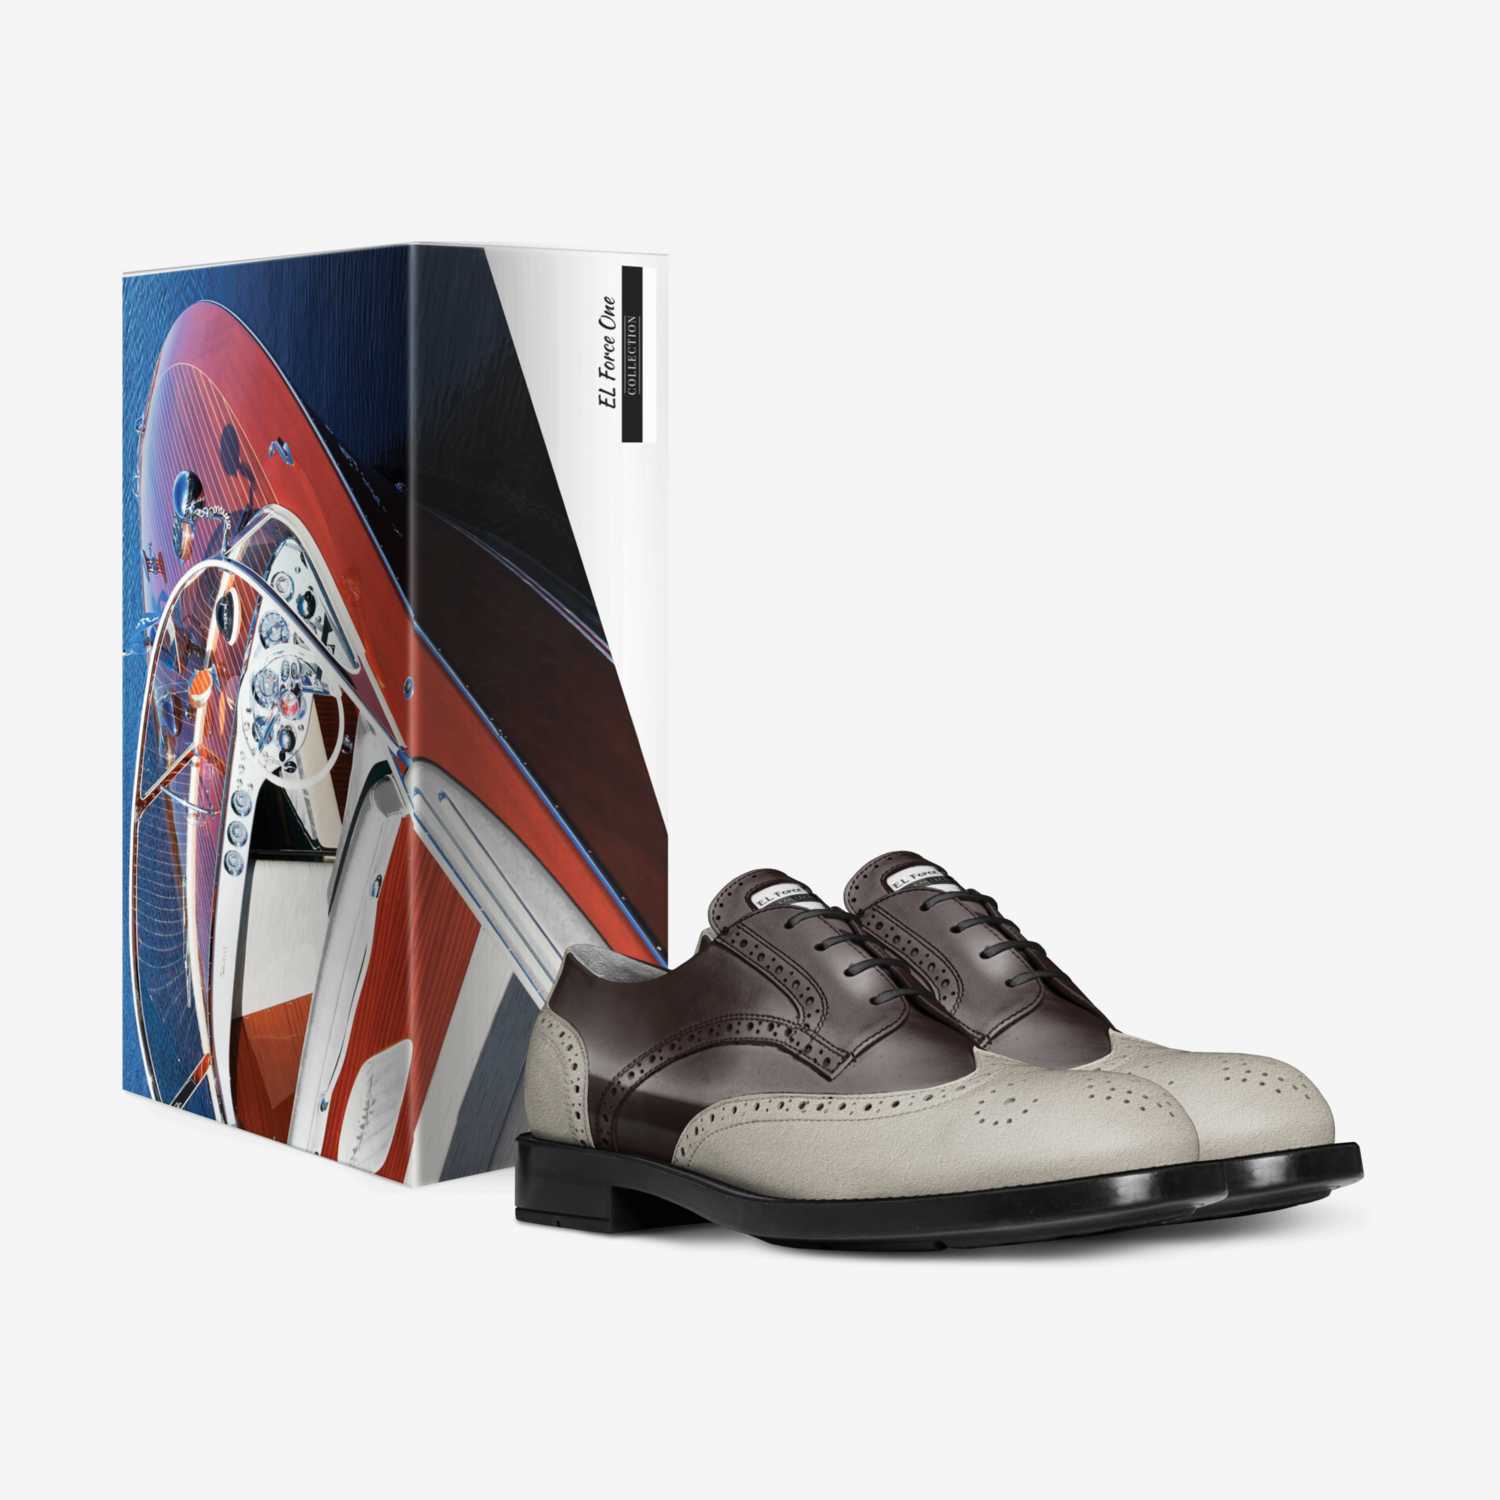 EL Force One custom made in Italy shoes by Edoardo Lanteri | Box view